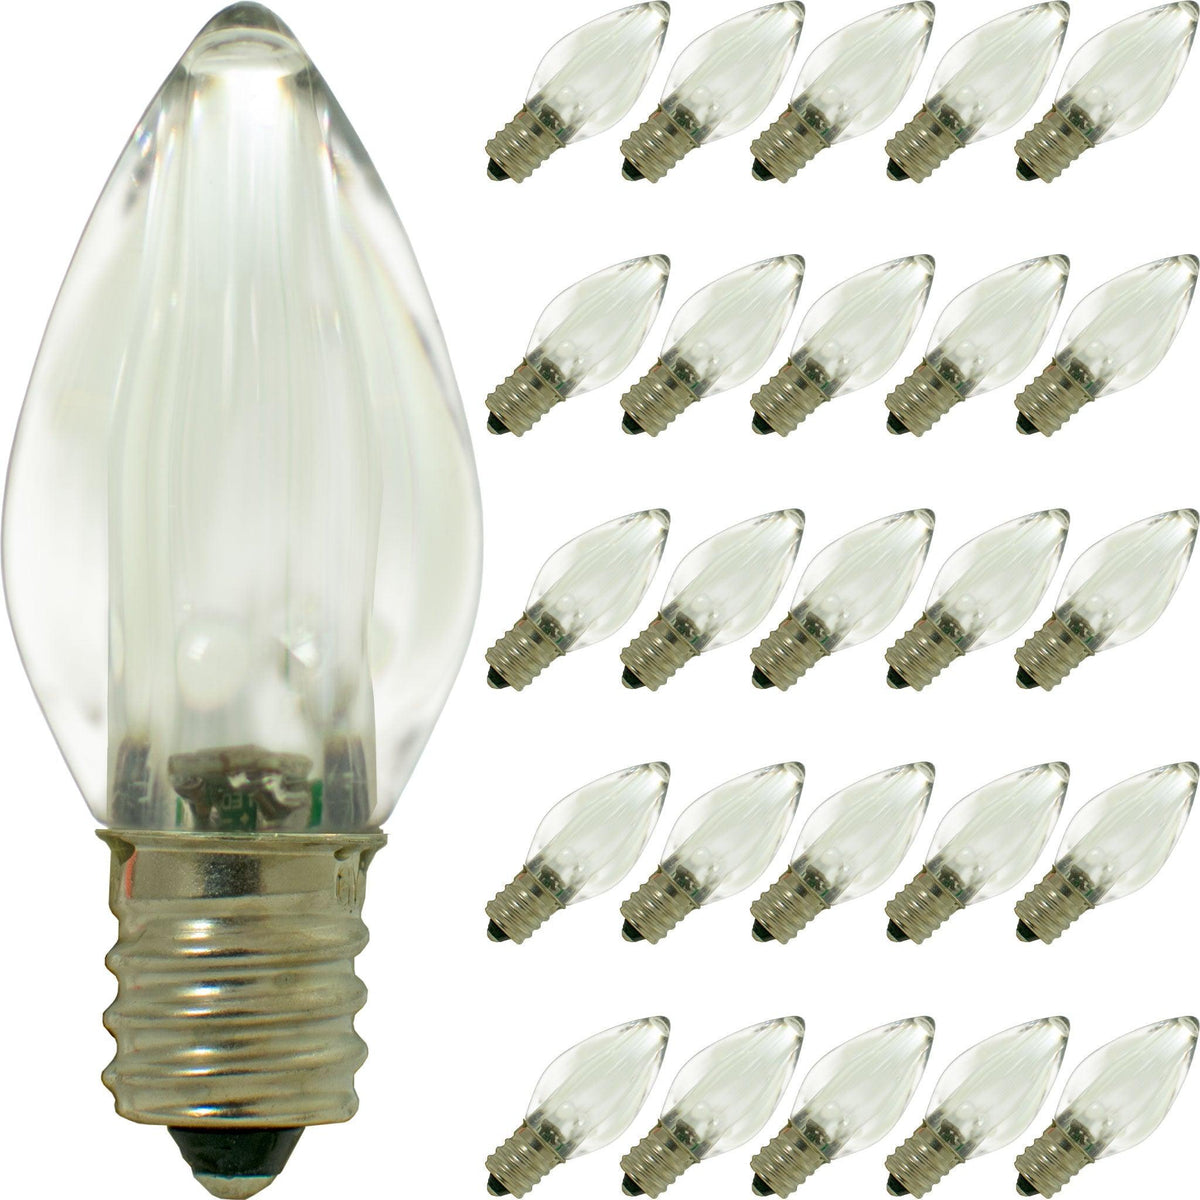 Clear LED Light Bulbs - Lee Display